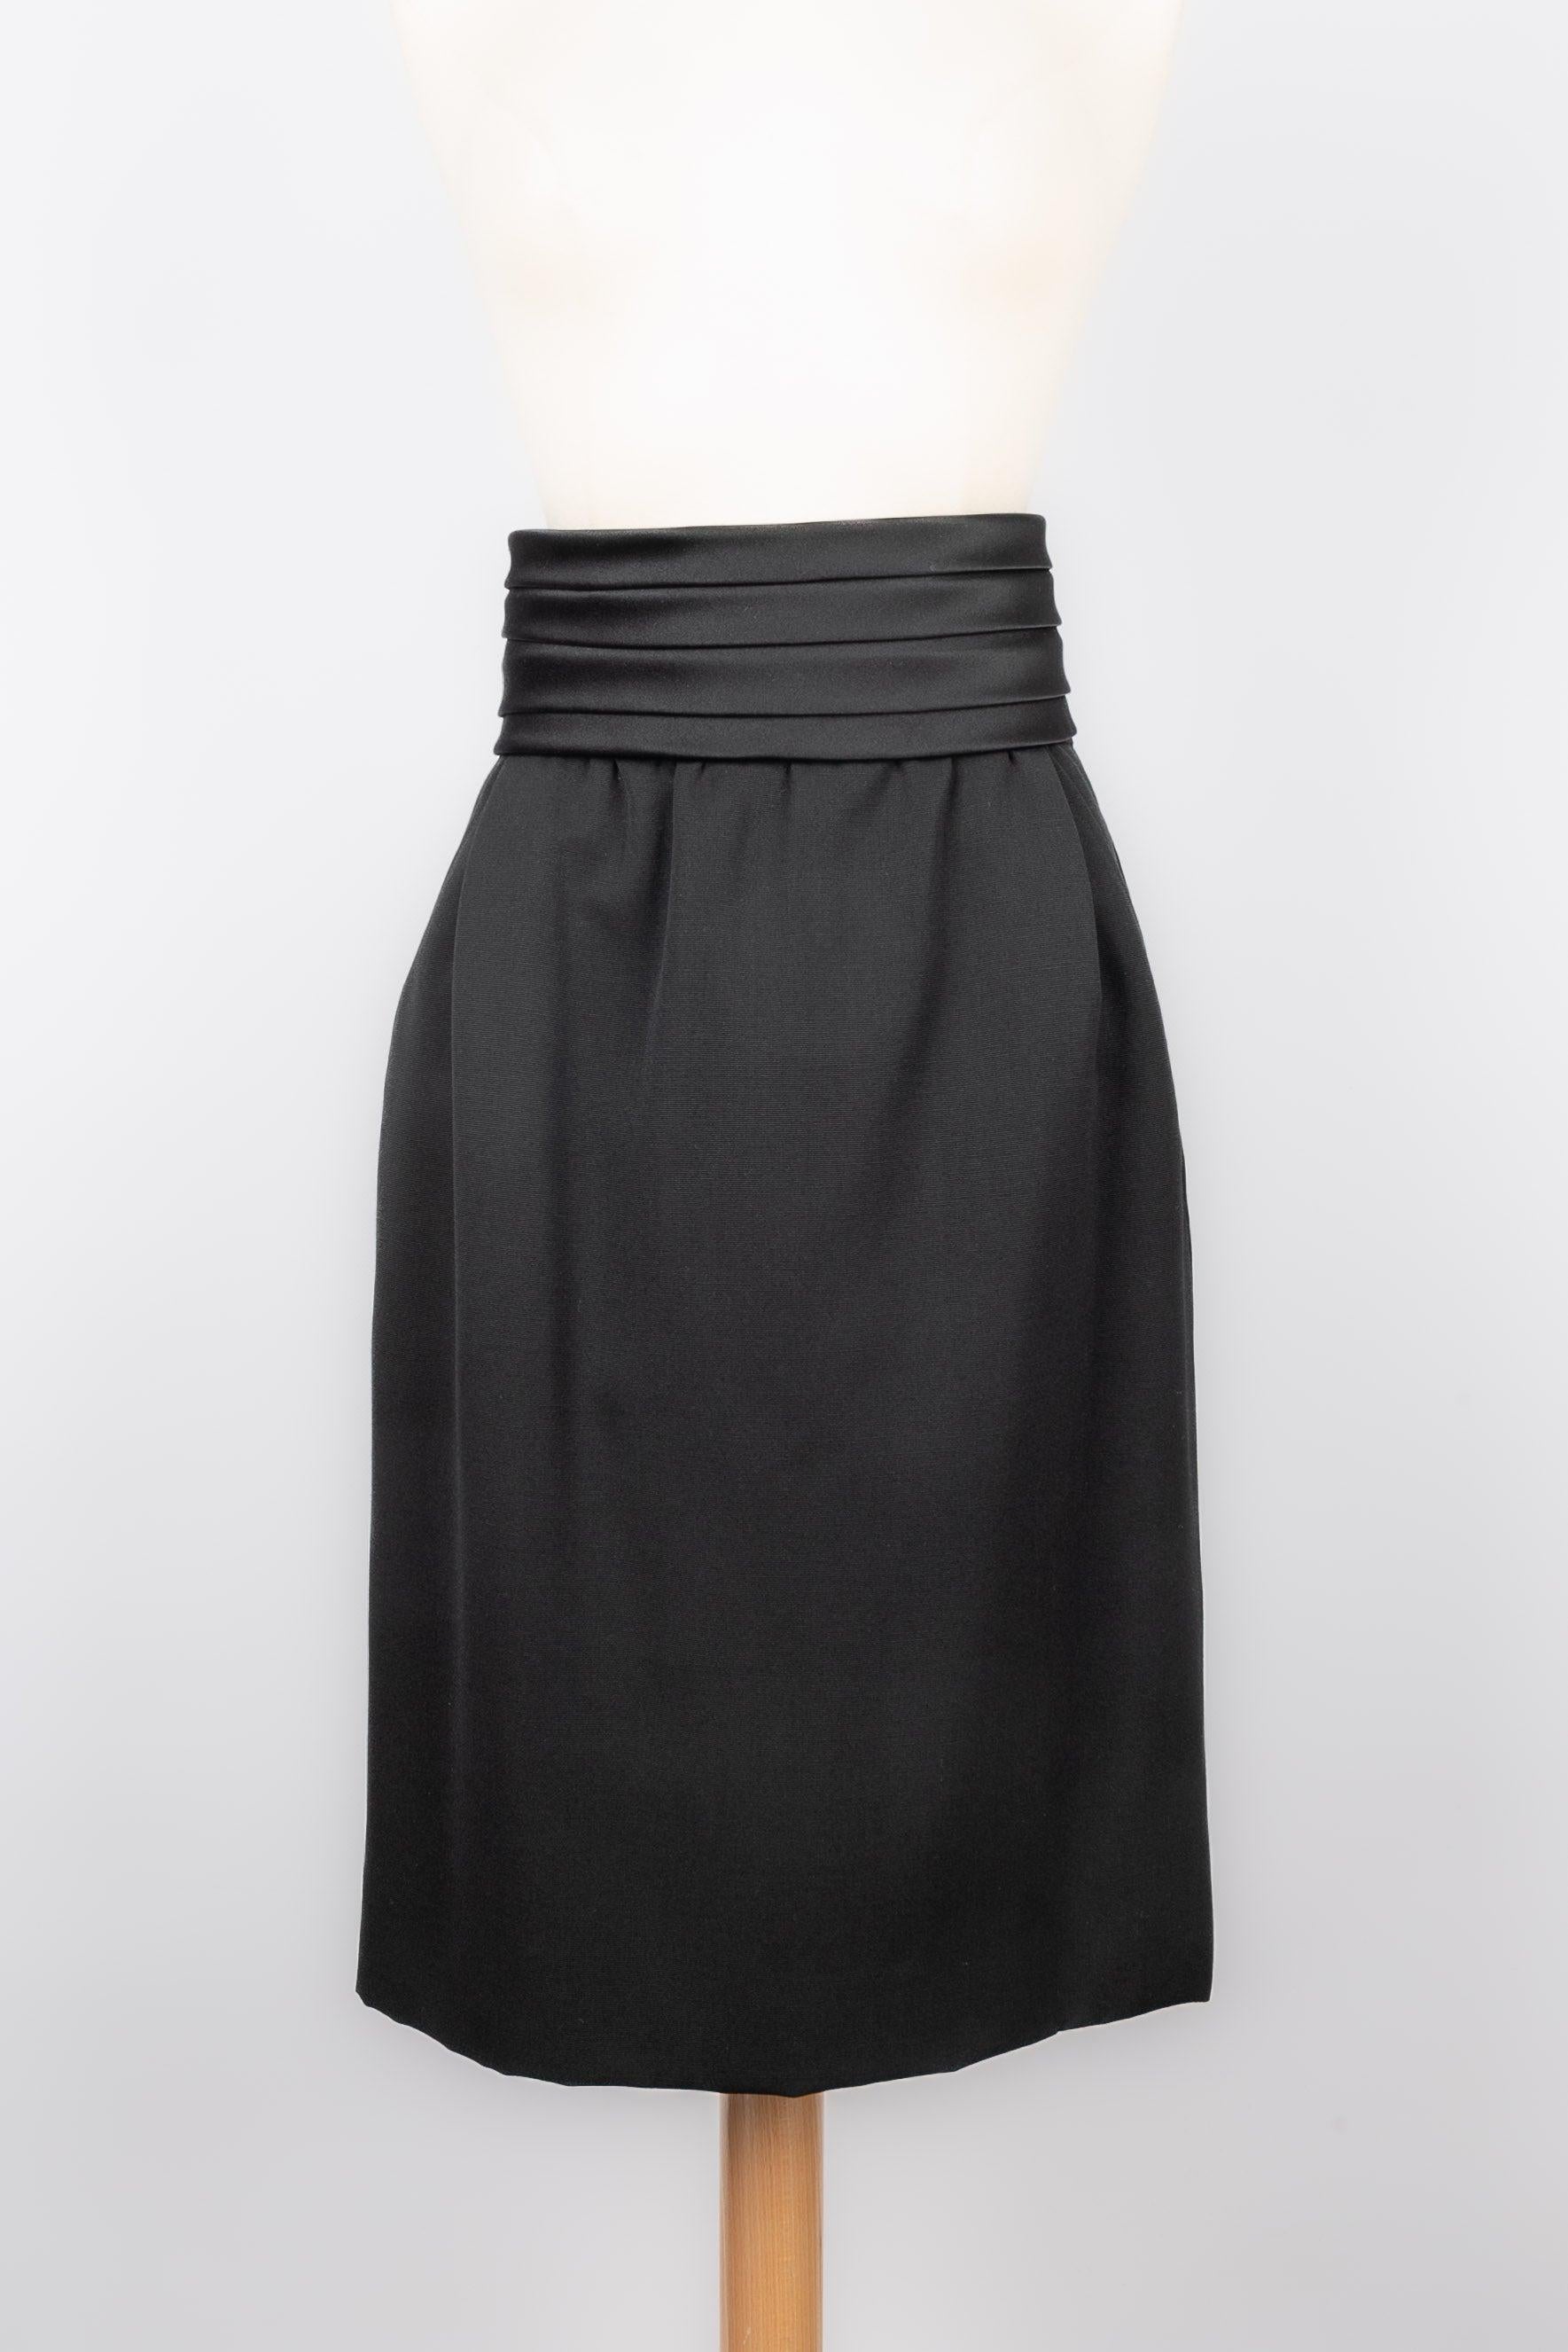 Yves Saint Laurent Black Skirt Suit Enlivened with Satin Belt Haute Couture 2